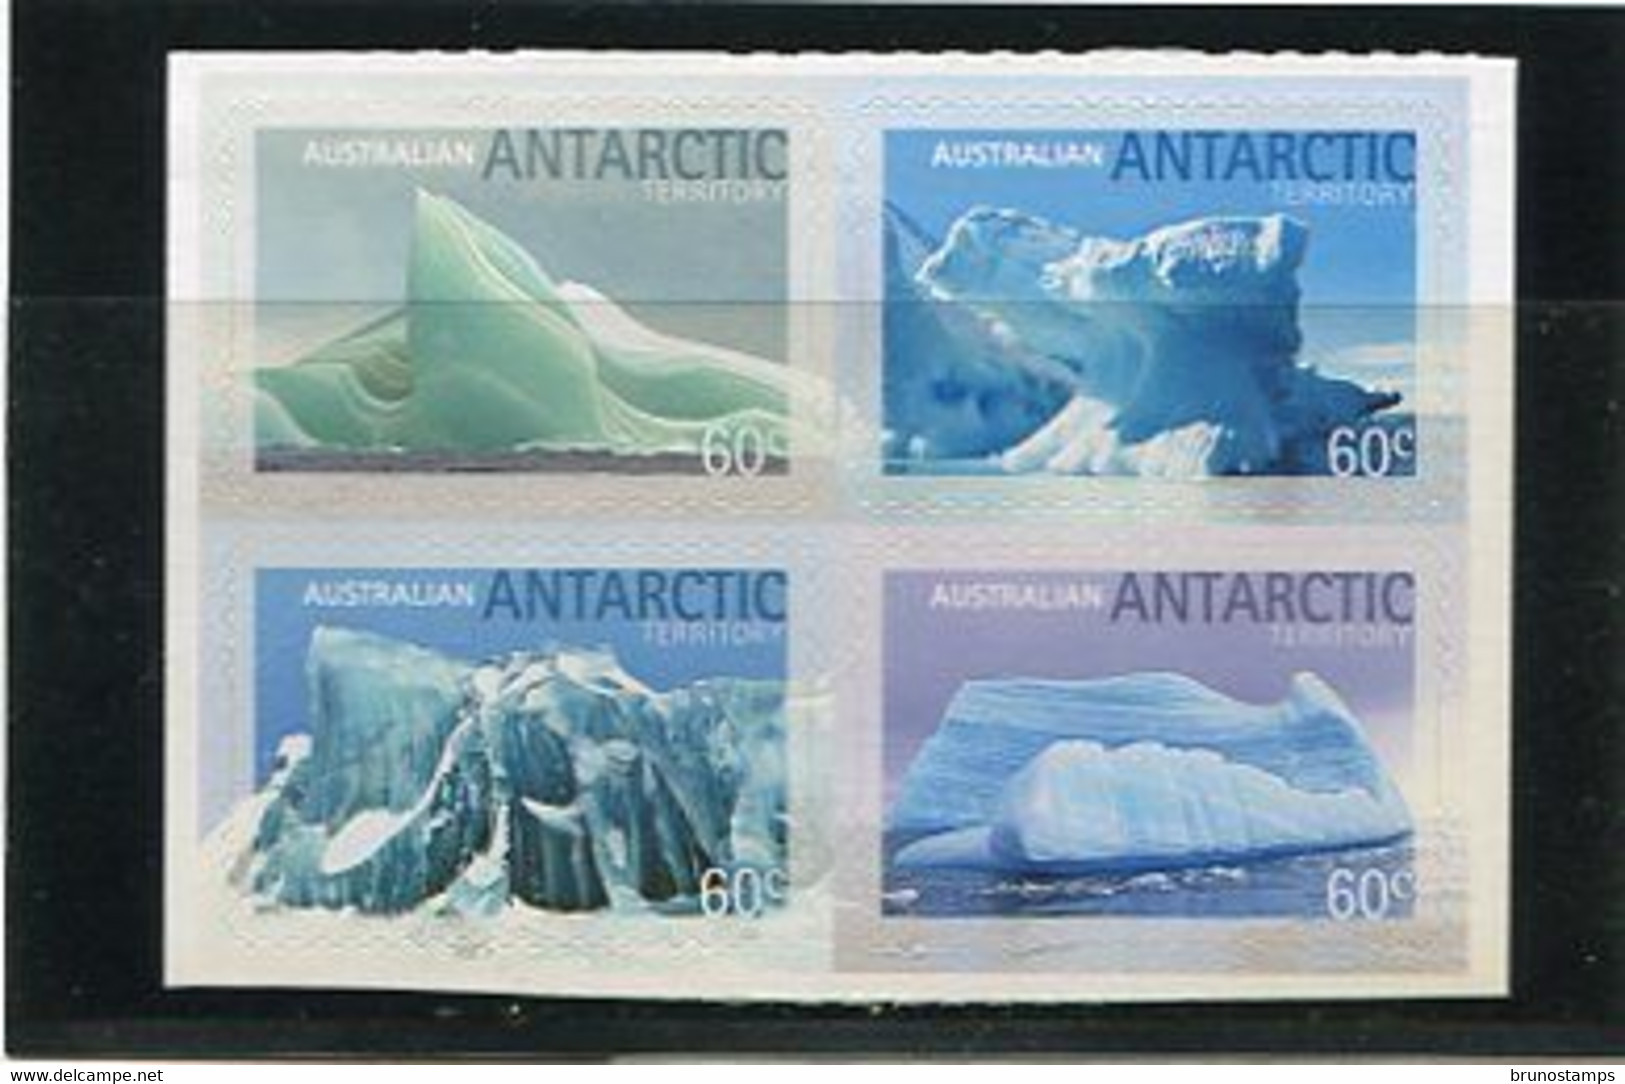 AUSTRALIA/A.A.T. - 2011  ICEBERG SELF ADHESIVE  SET  MINT NH - Mint Stamps